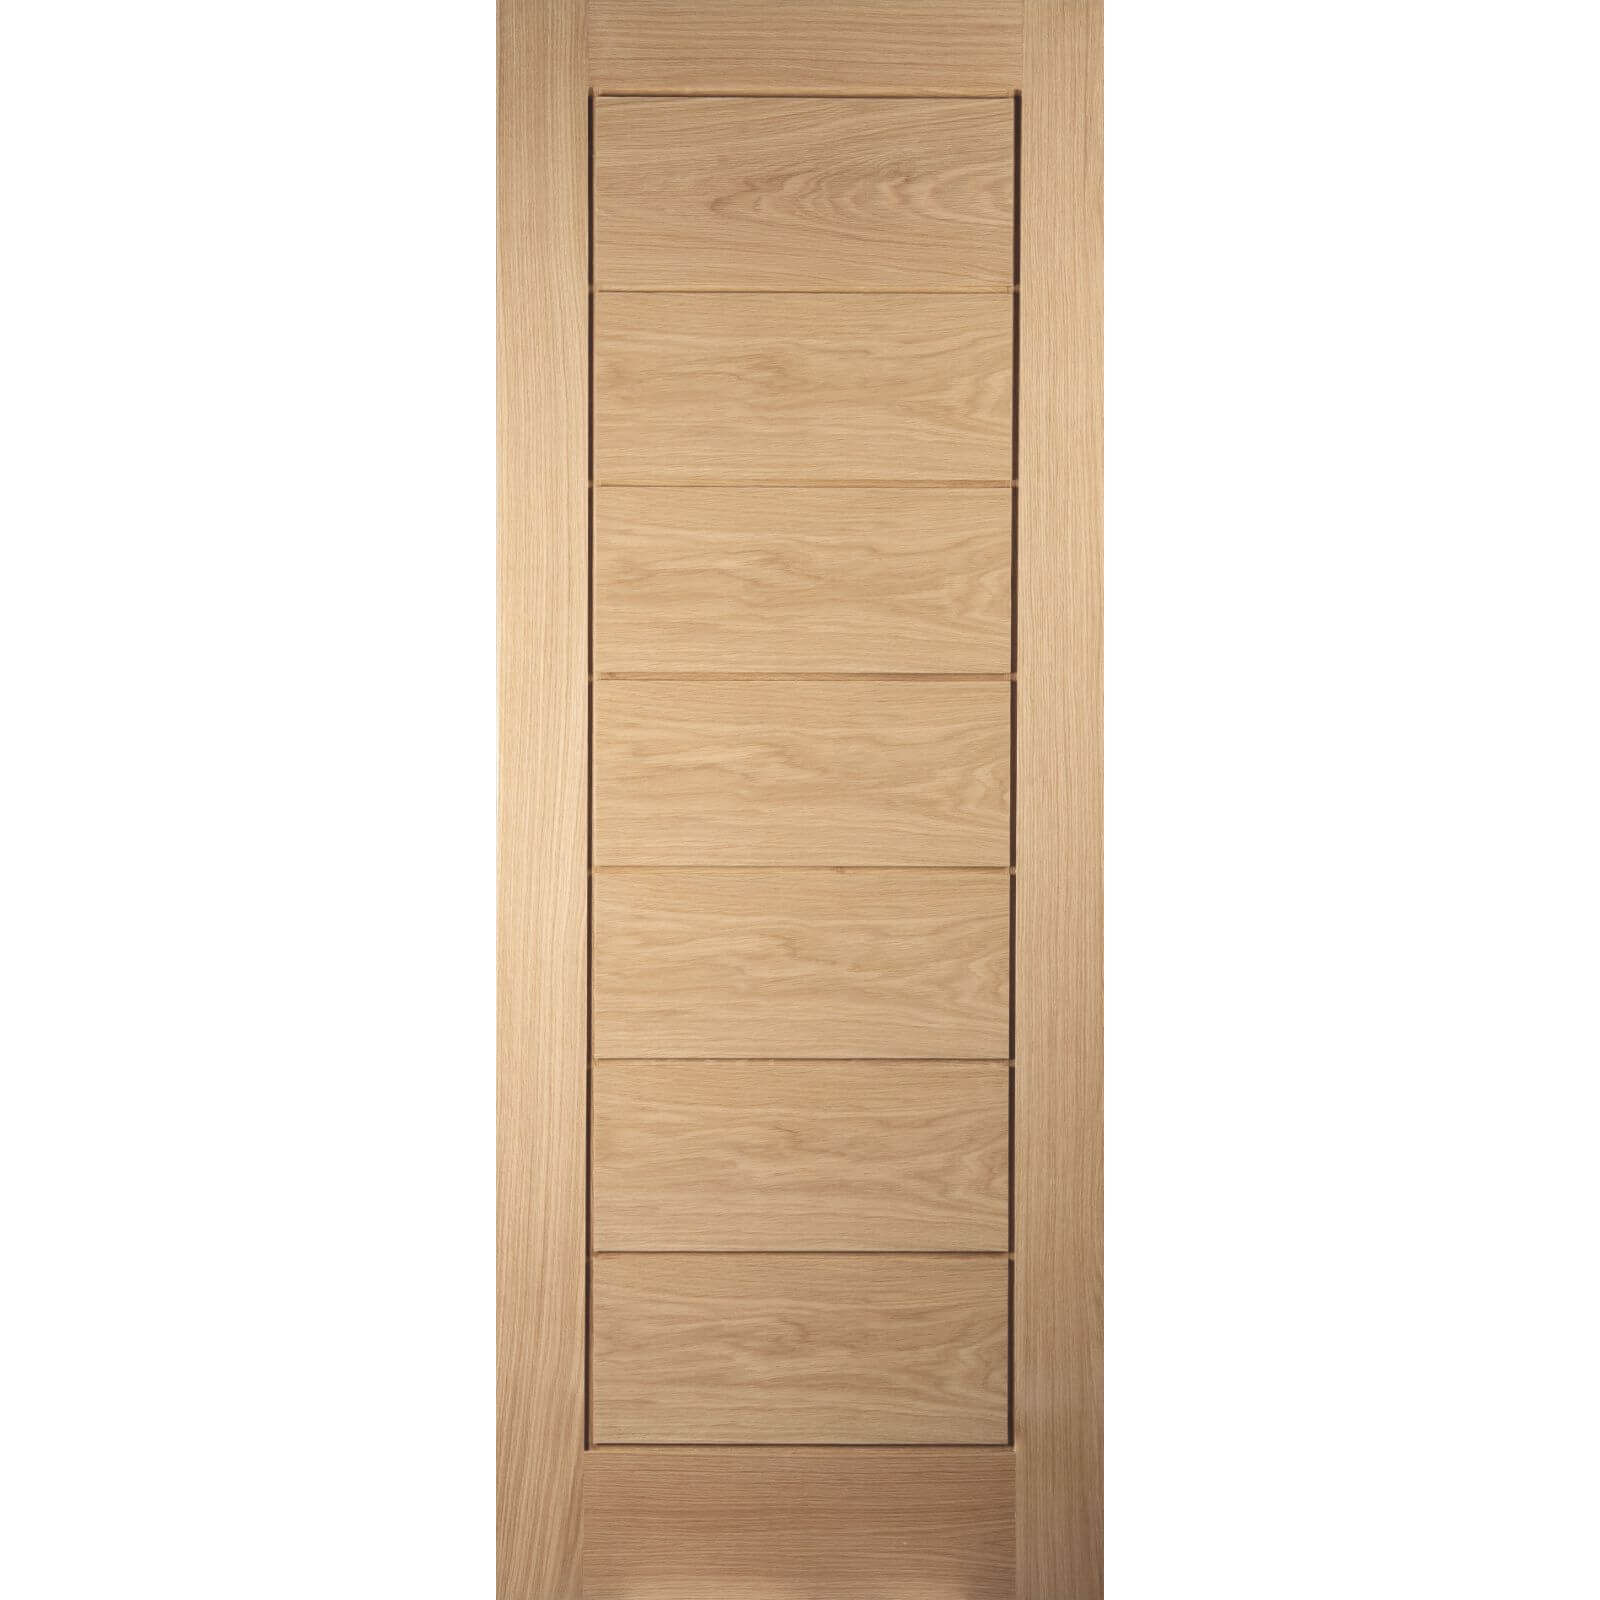 Horizontal 7 Panel White Oak Veneer Internal Door - 826mm Wide